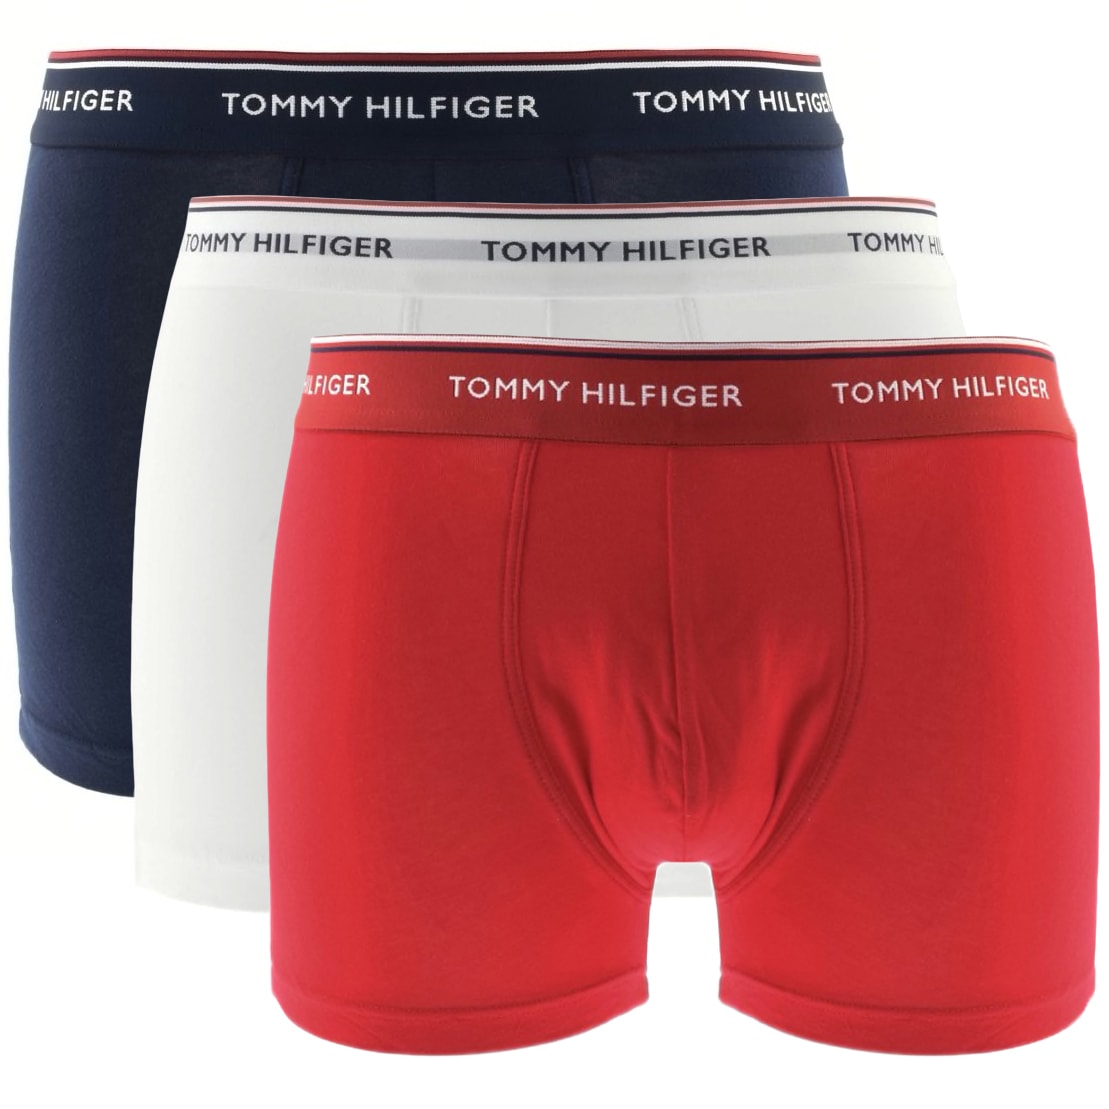 where to buy tommy hilfiger underwear